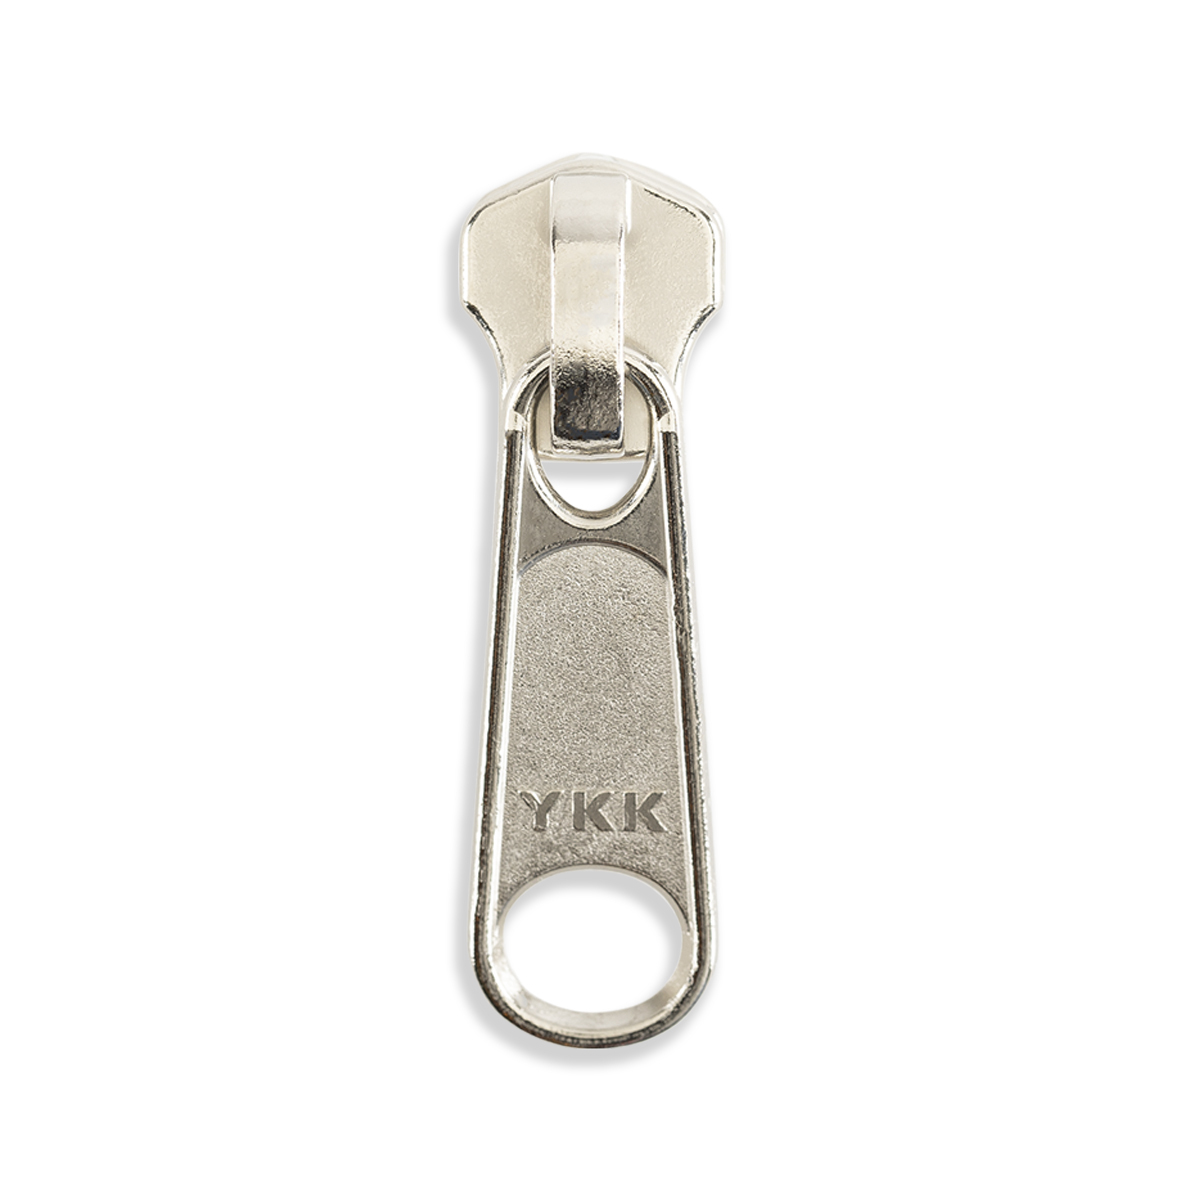 Hans Non Lock Custom Metal Zipper Pull - China Zipper Slider Size 7 and  Zipper Slider Bag price